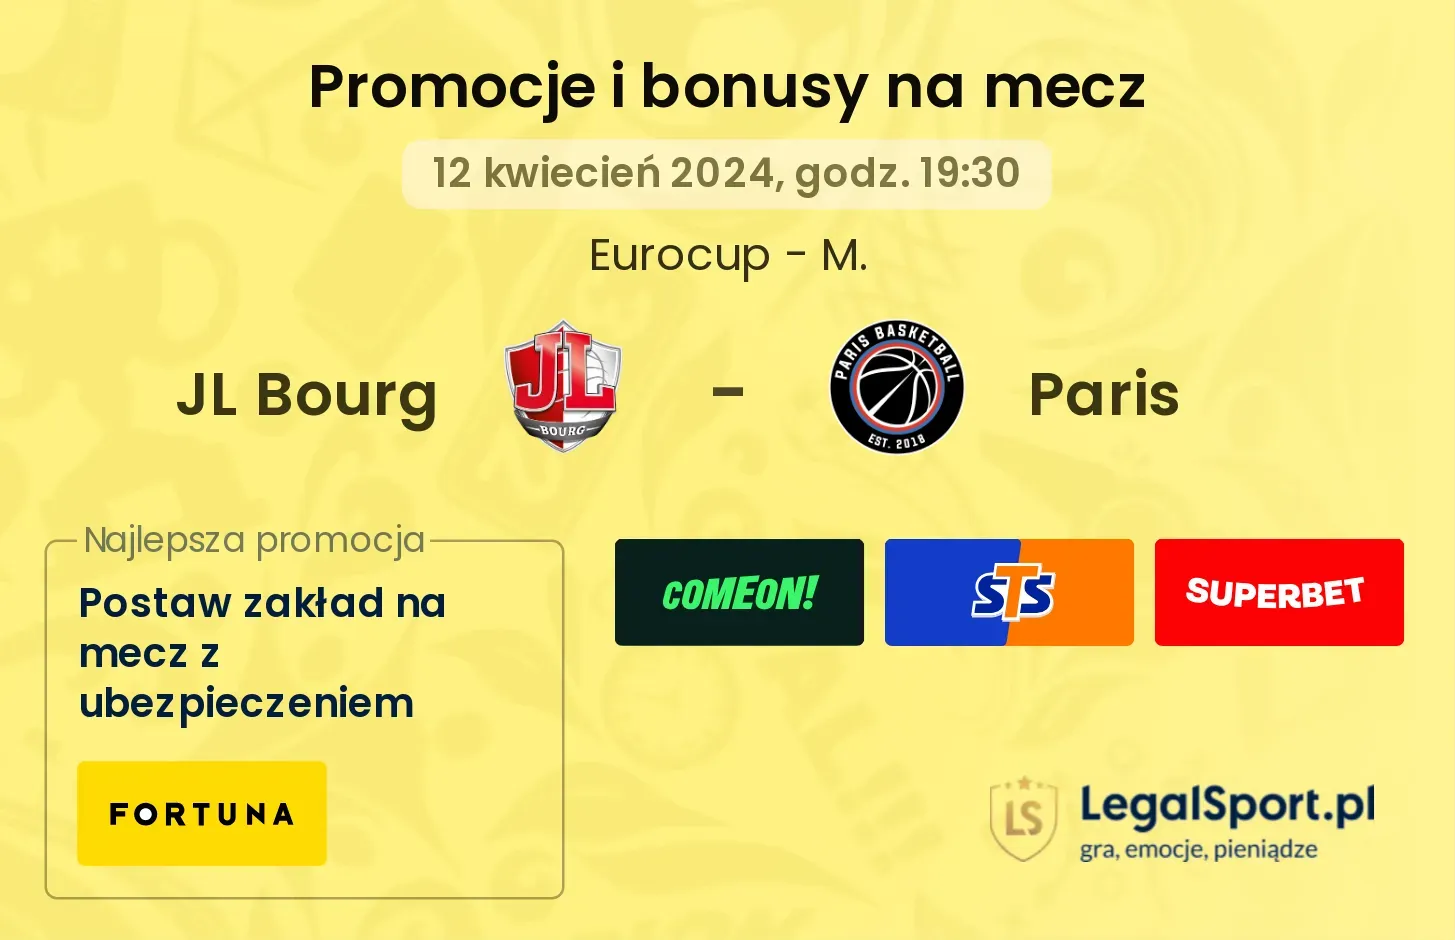 JL Bourg - Paris promocje bonusy na mecz